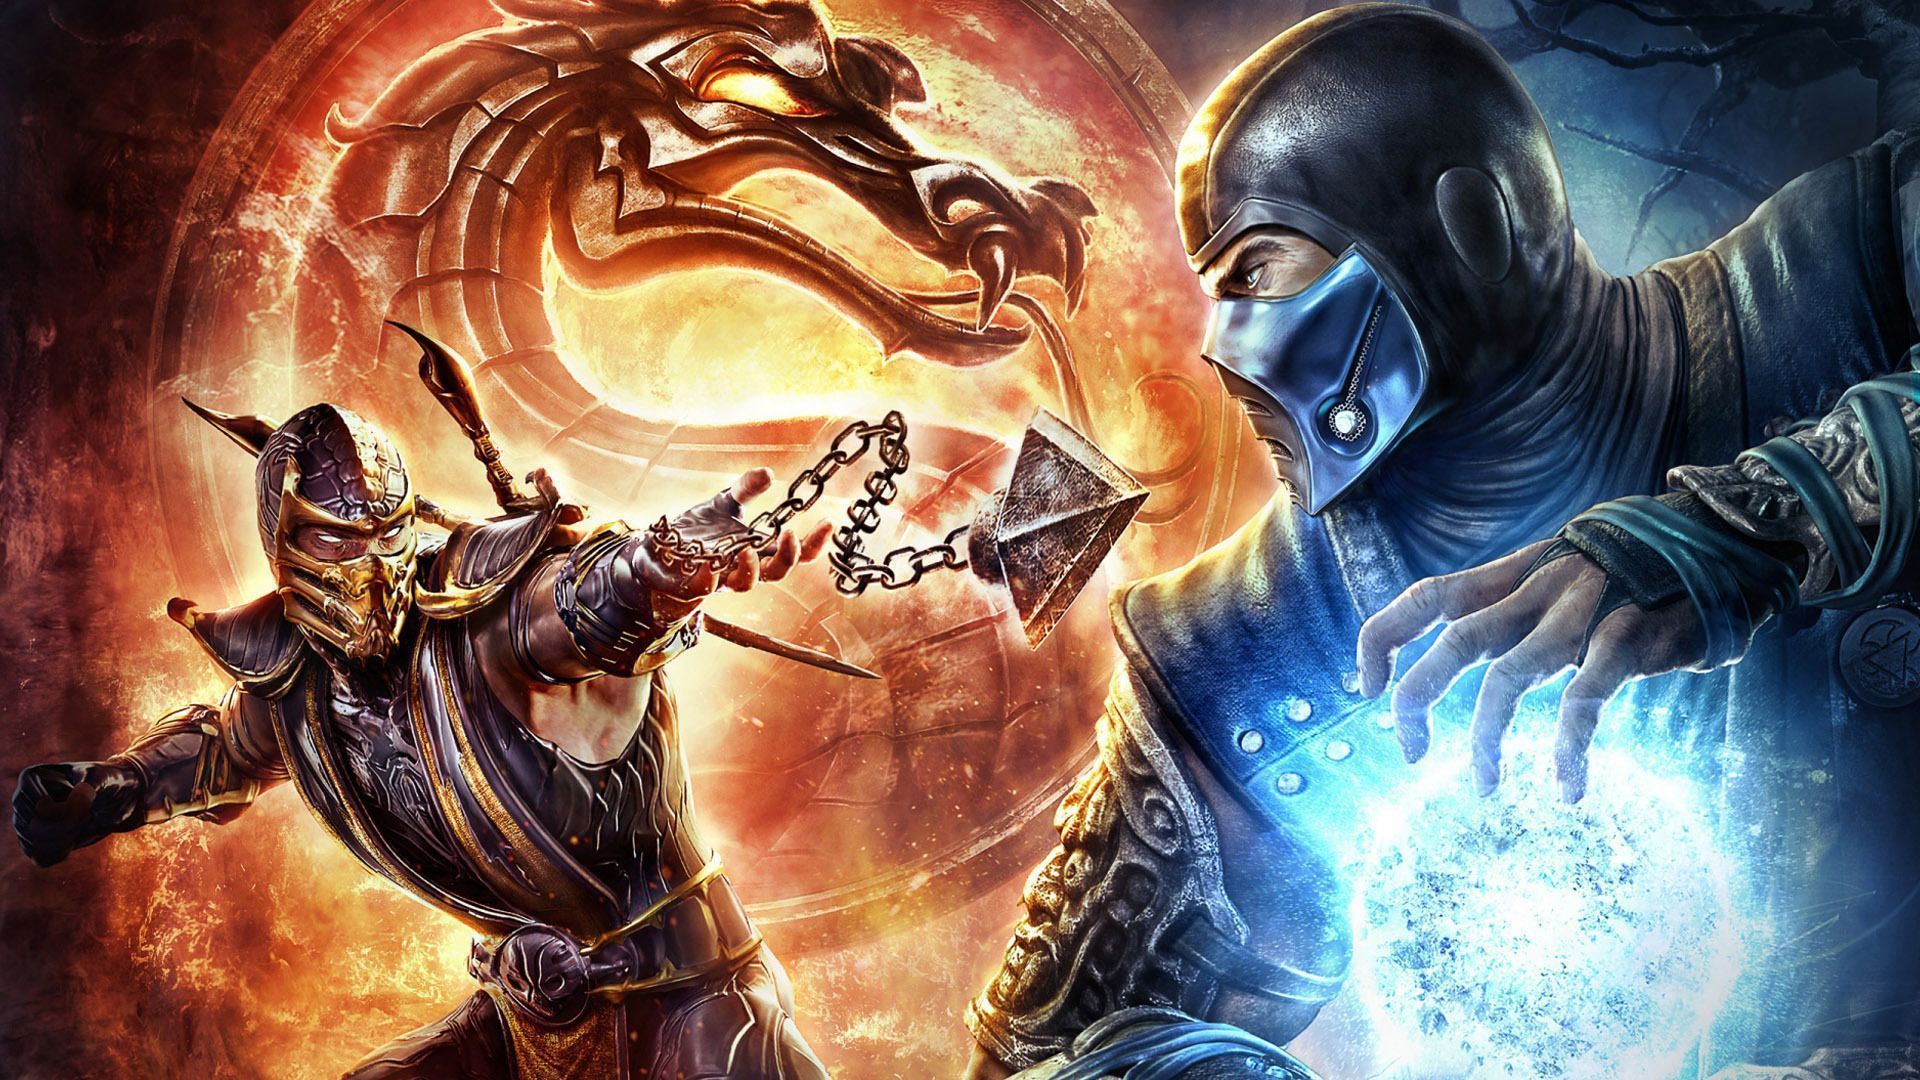 Mortal Kombat Scorpion Vs Sub Zero - wallpaper